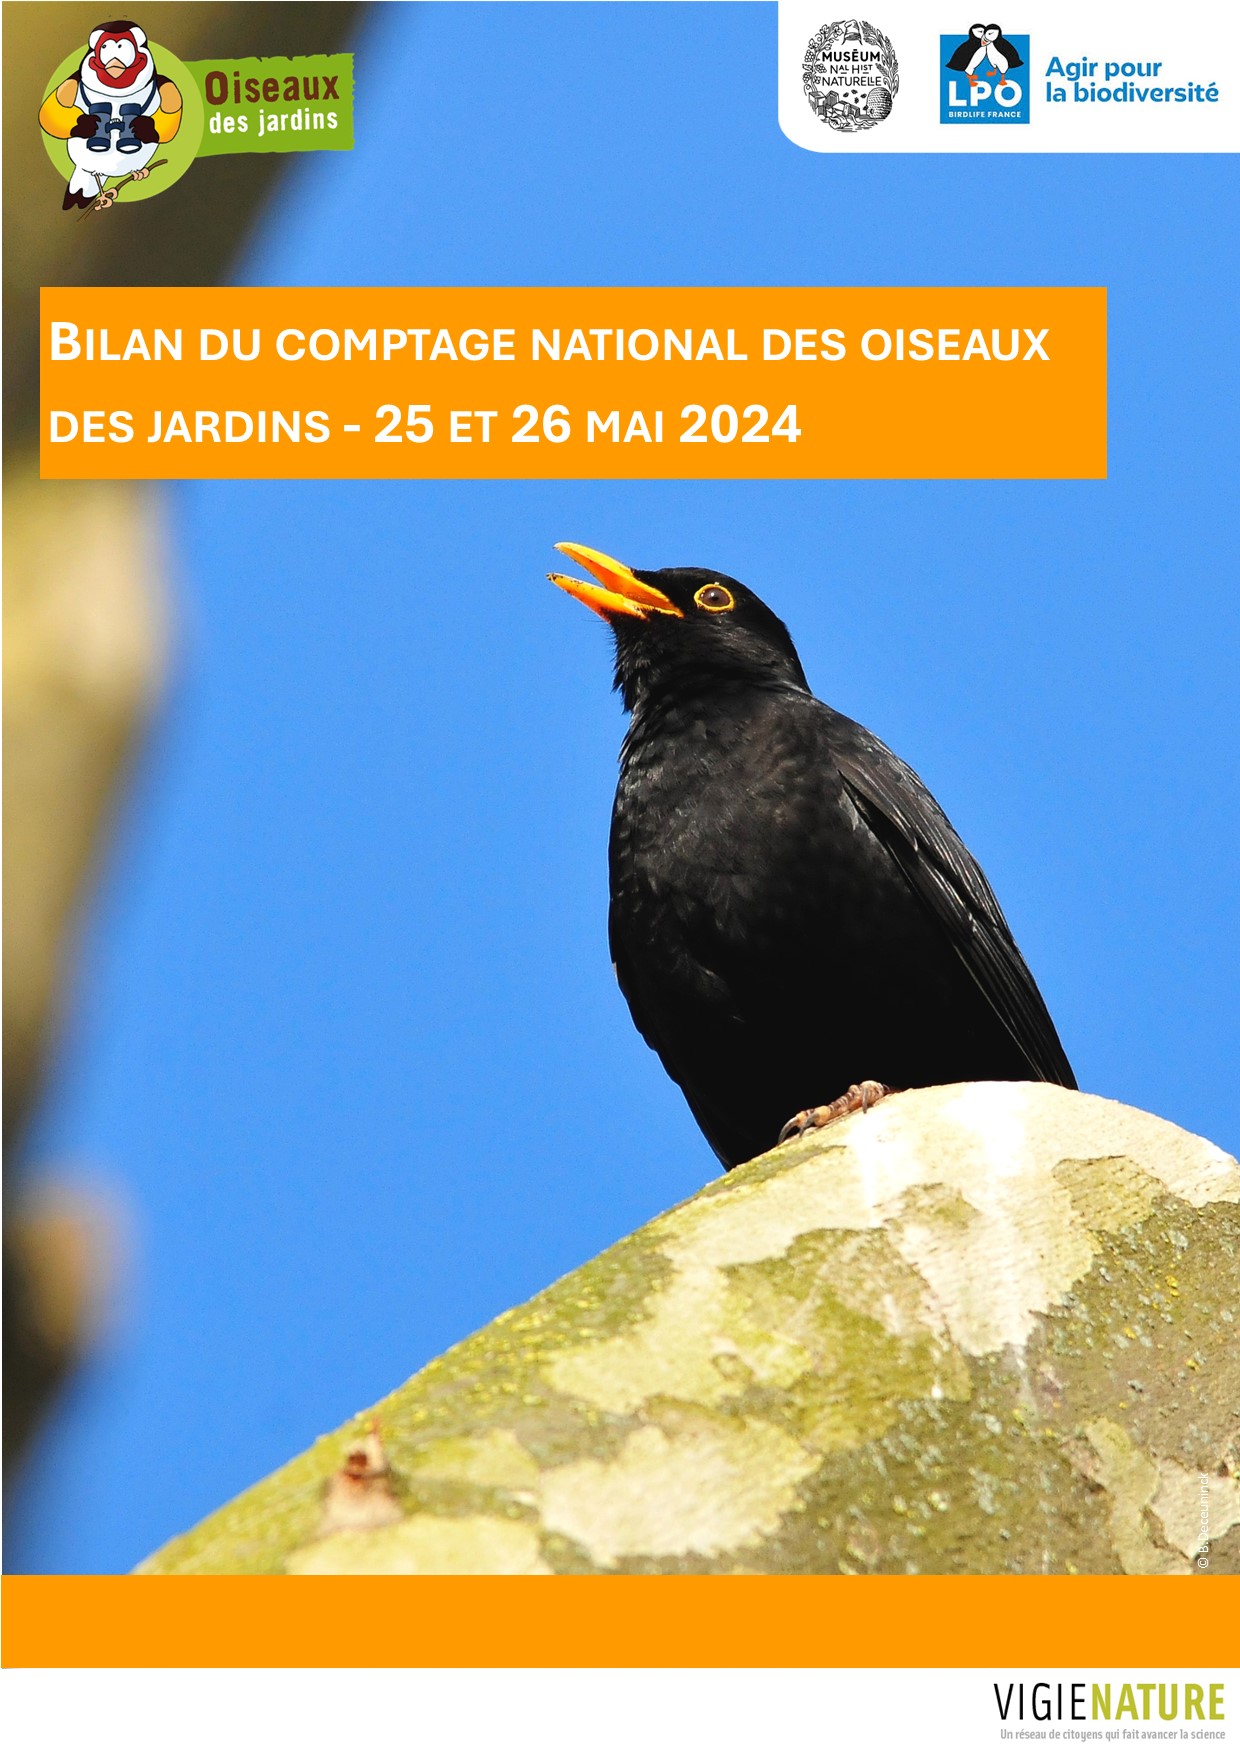 https://cdnfiles1.biolovision.net/www.oiseauxdesjardins.fr/userfiles/VisuelBilancomptageodjmai2024.jpg